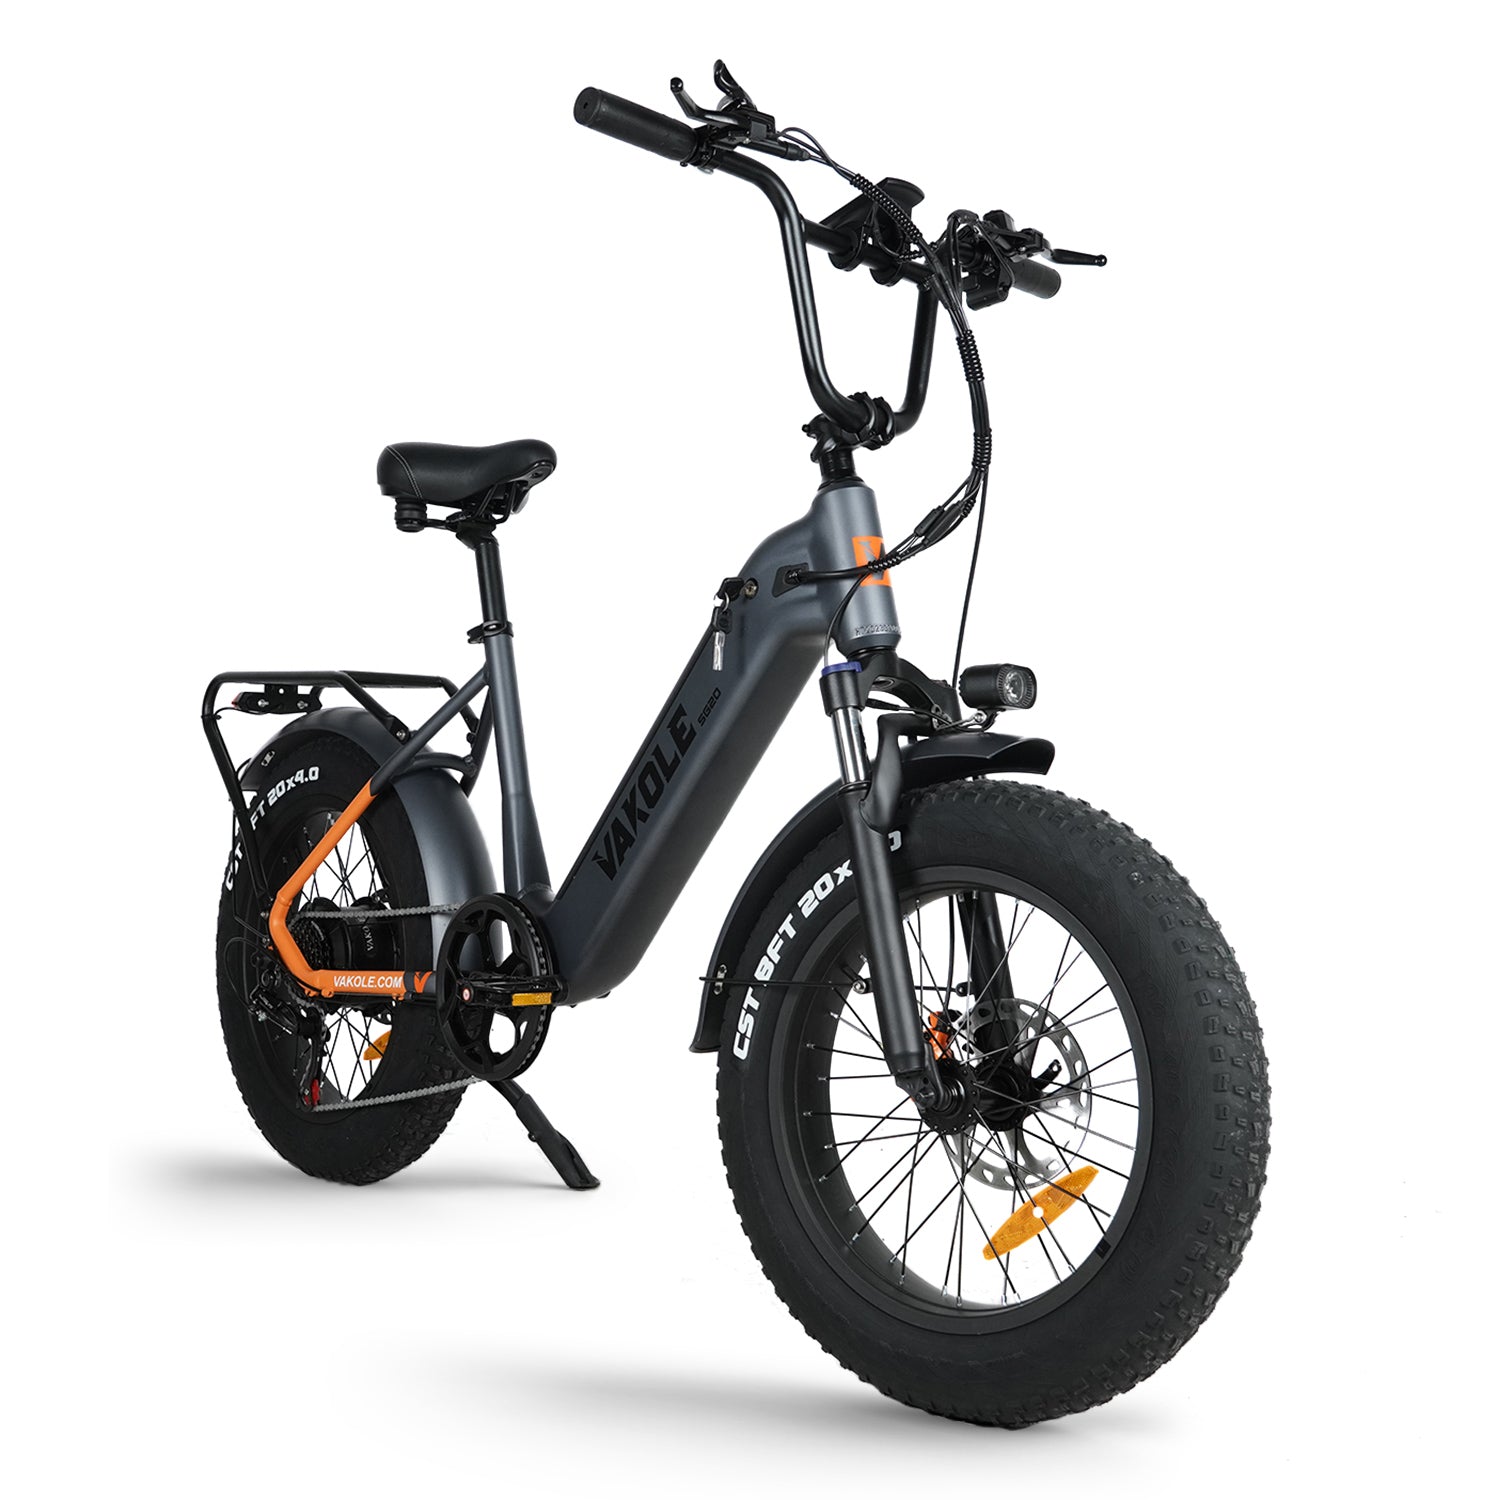 Vakole SG20 250W 20" Fat Bike Bici Elettrica Cargo E-bike 48V 15.6Ah Batteria Samsung